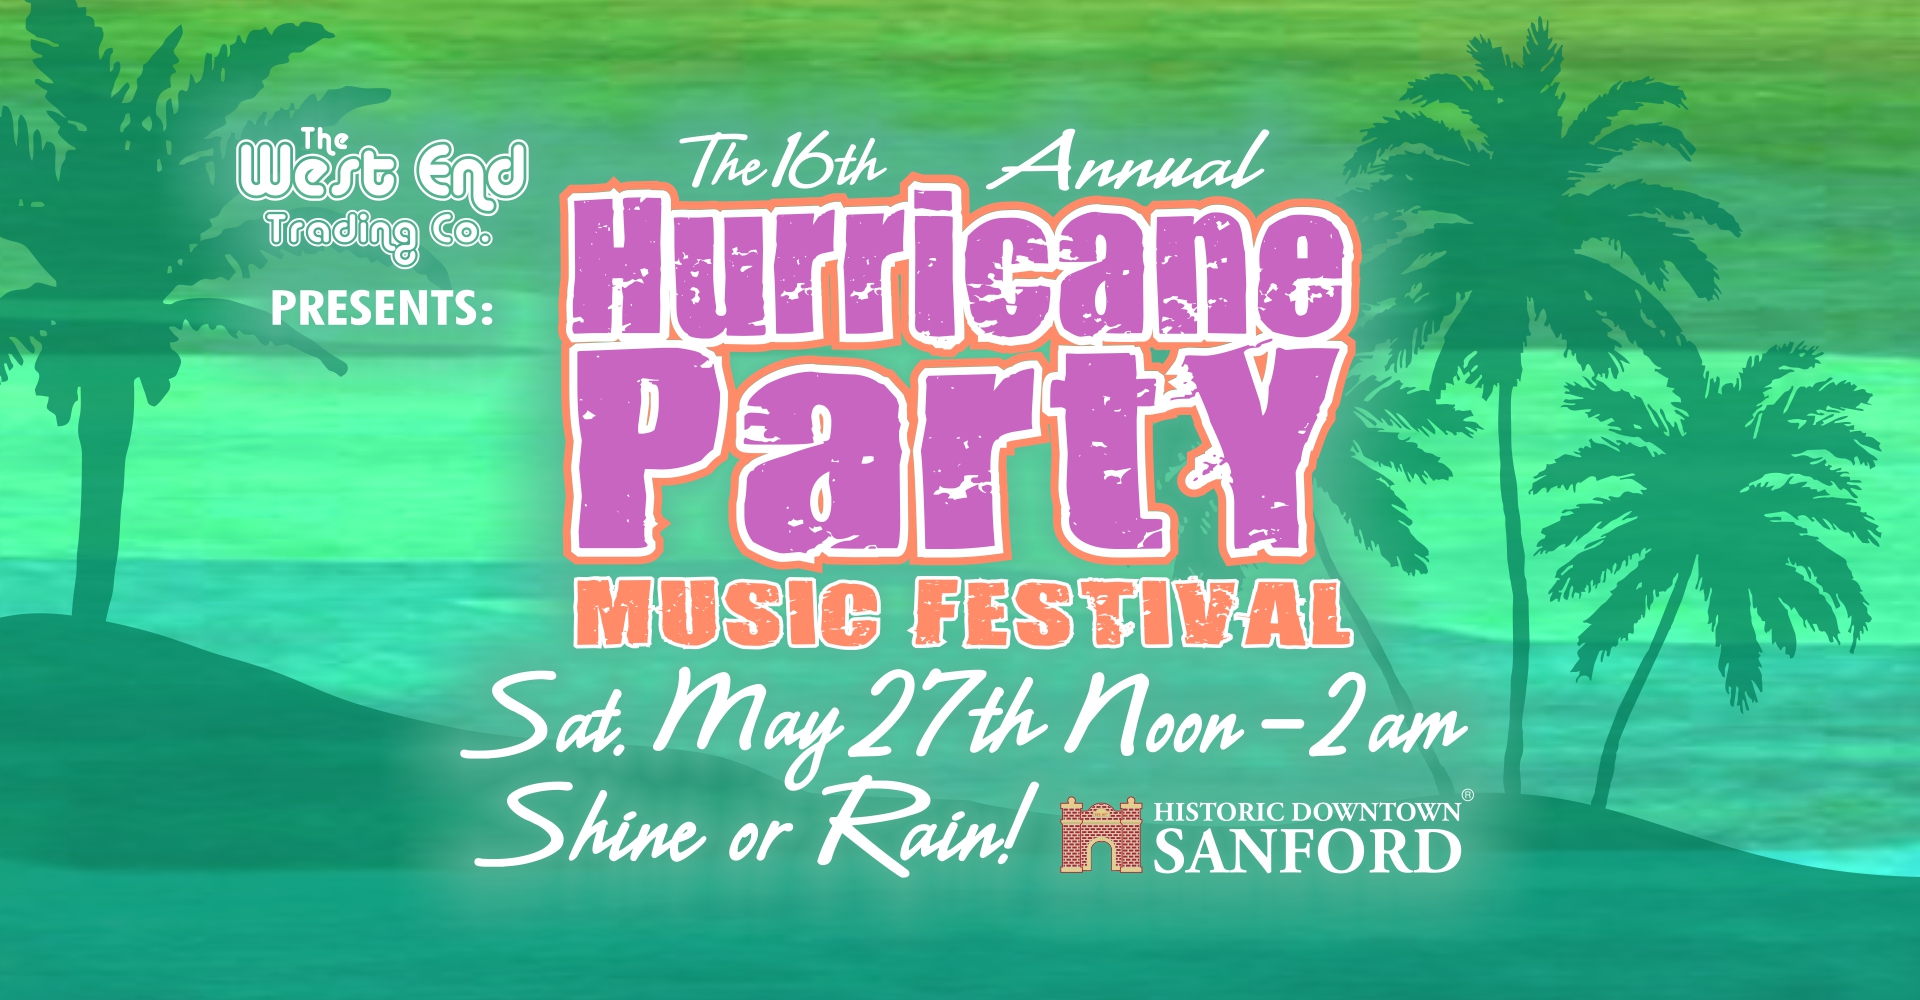 16th Annual Hurricane Party Music Festival